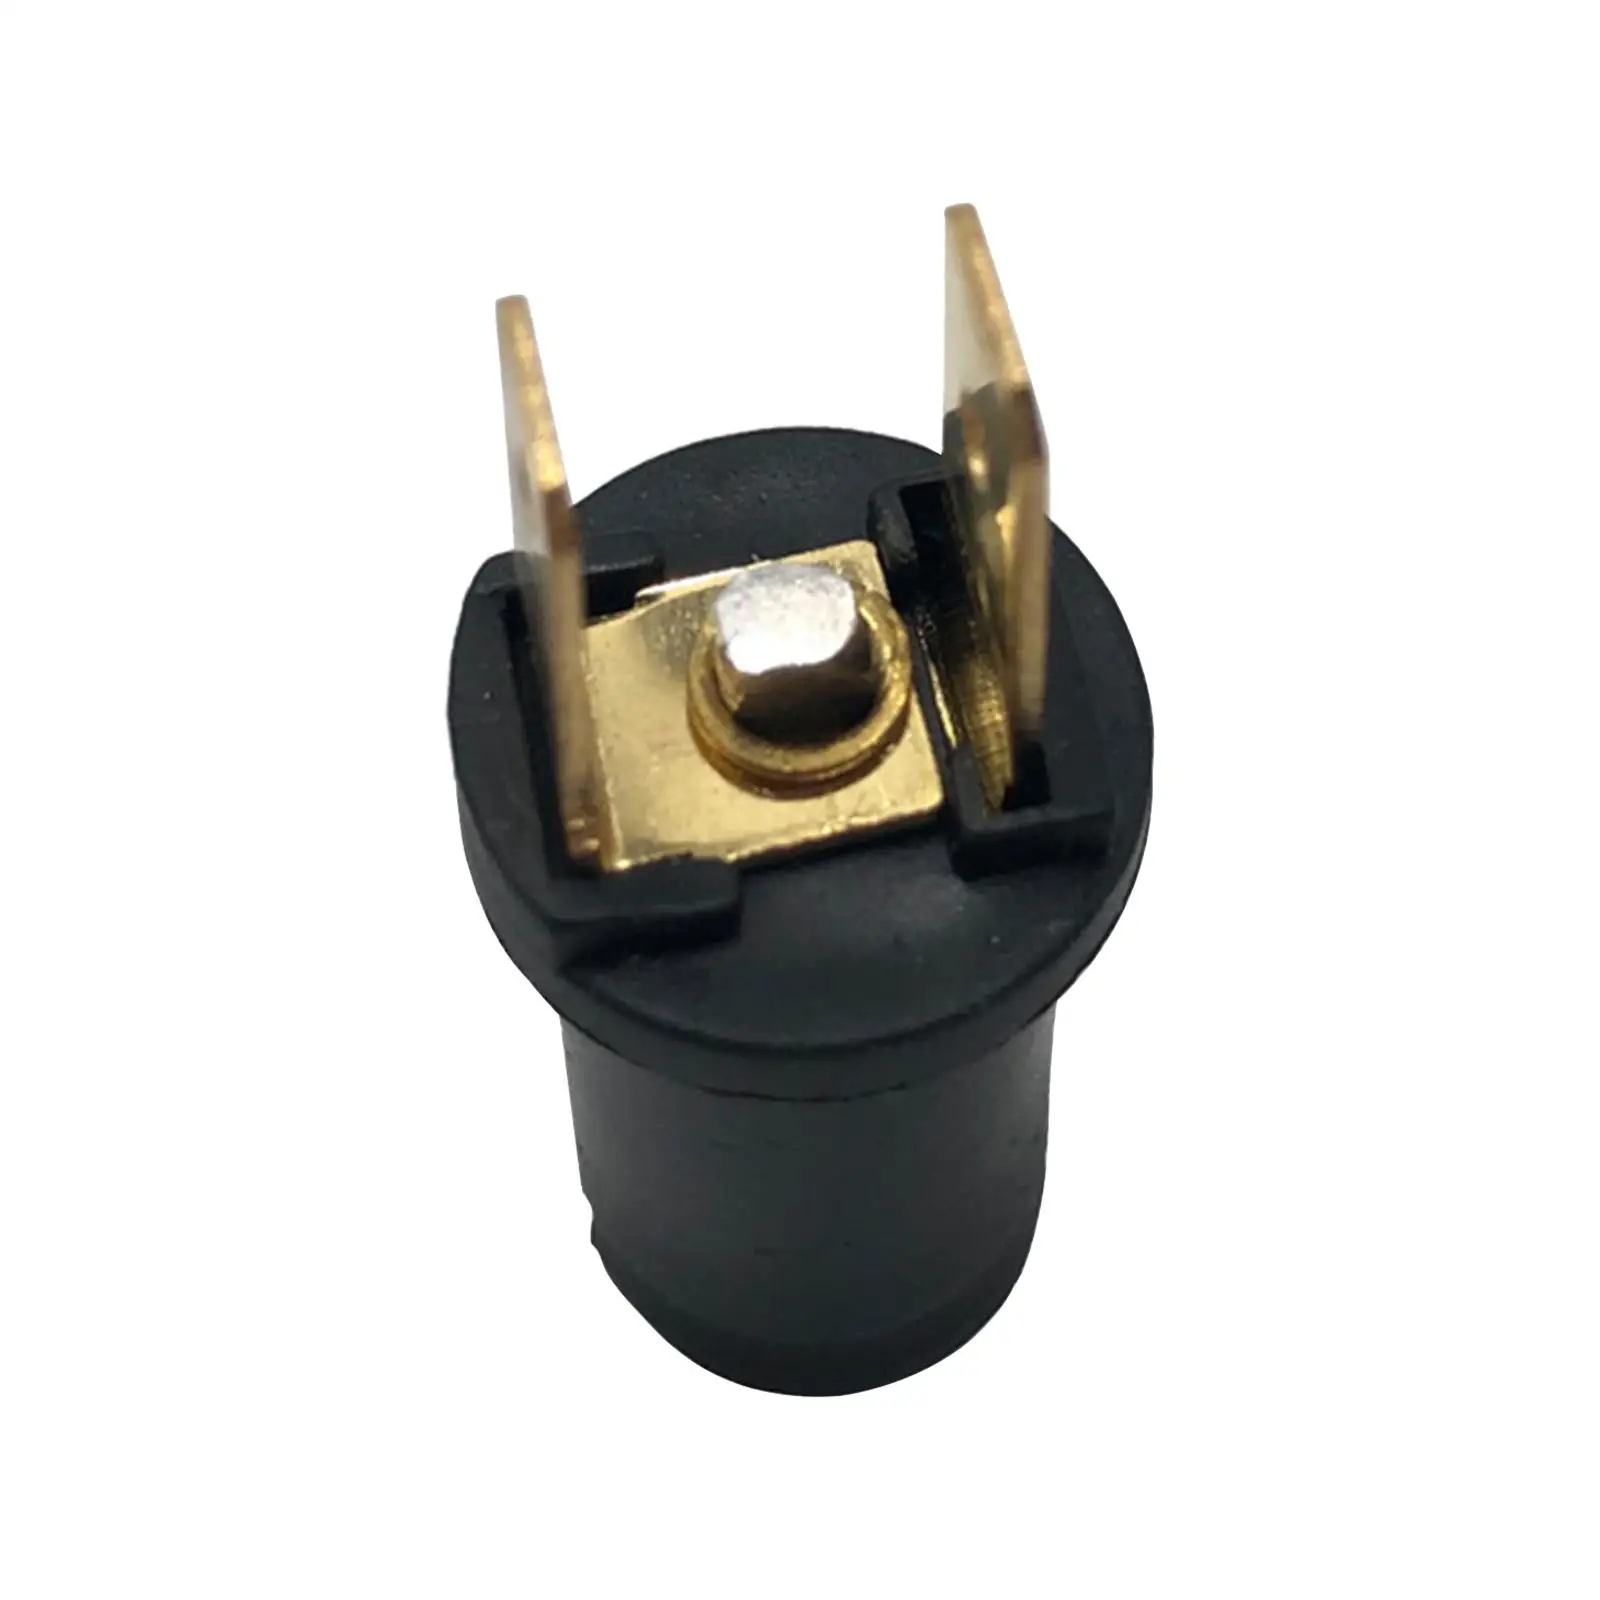 Side Lamp Holder Replacement for 433B 12V 10W 433 12V 20W 233afl 48V 5W